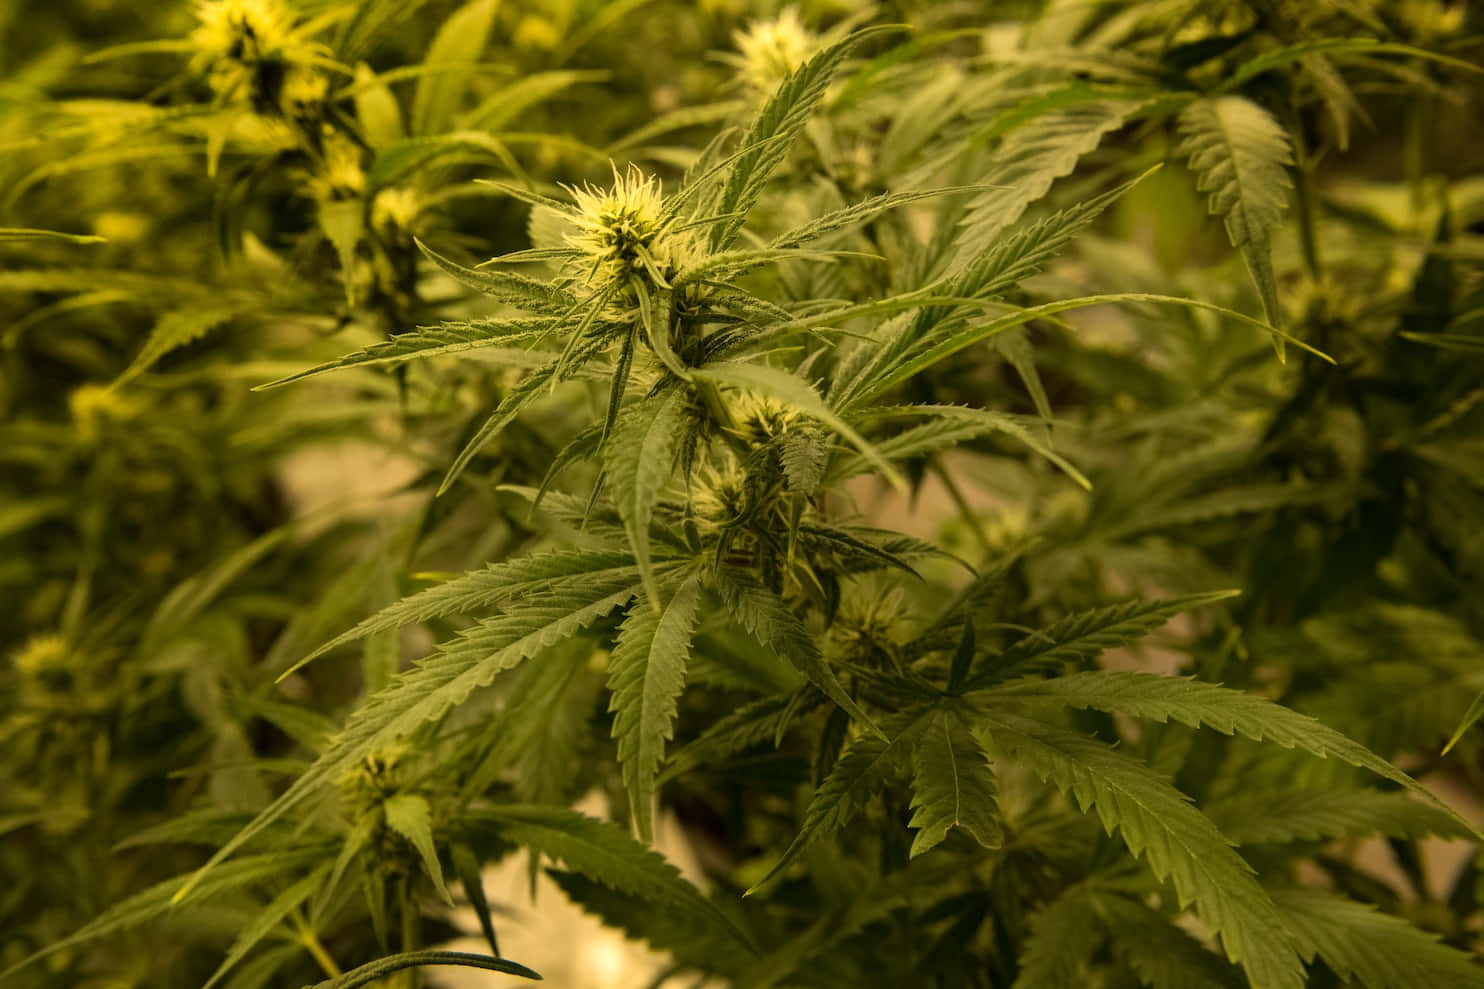 Aesthetic Marijuana Plant in Full Bloom